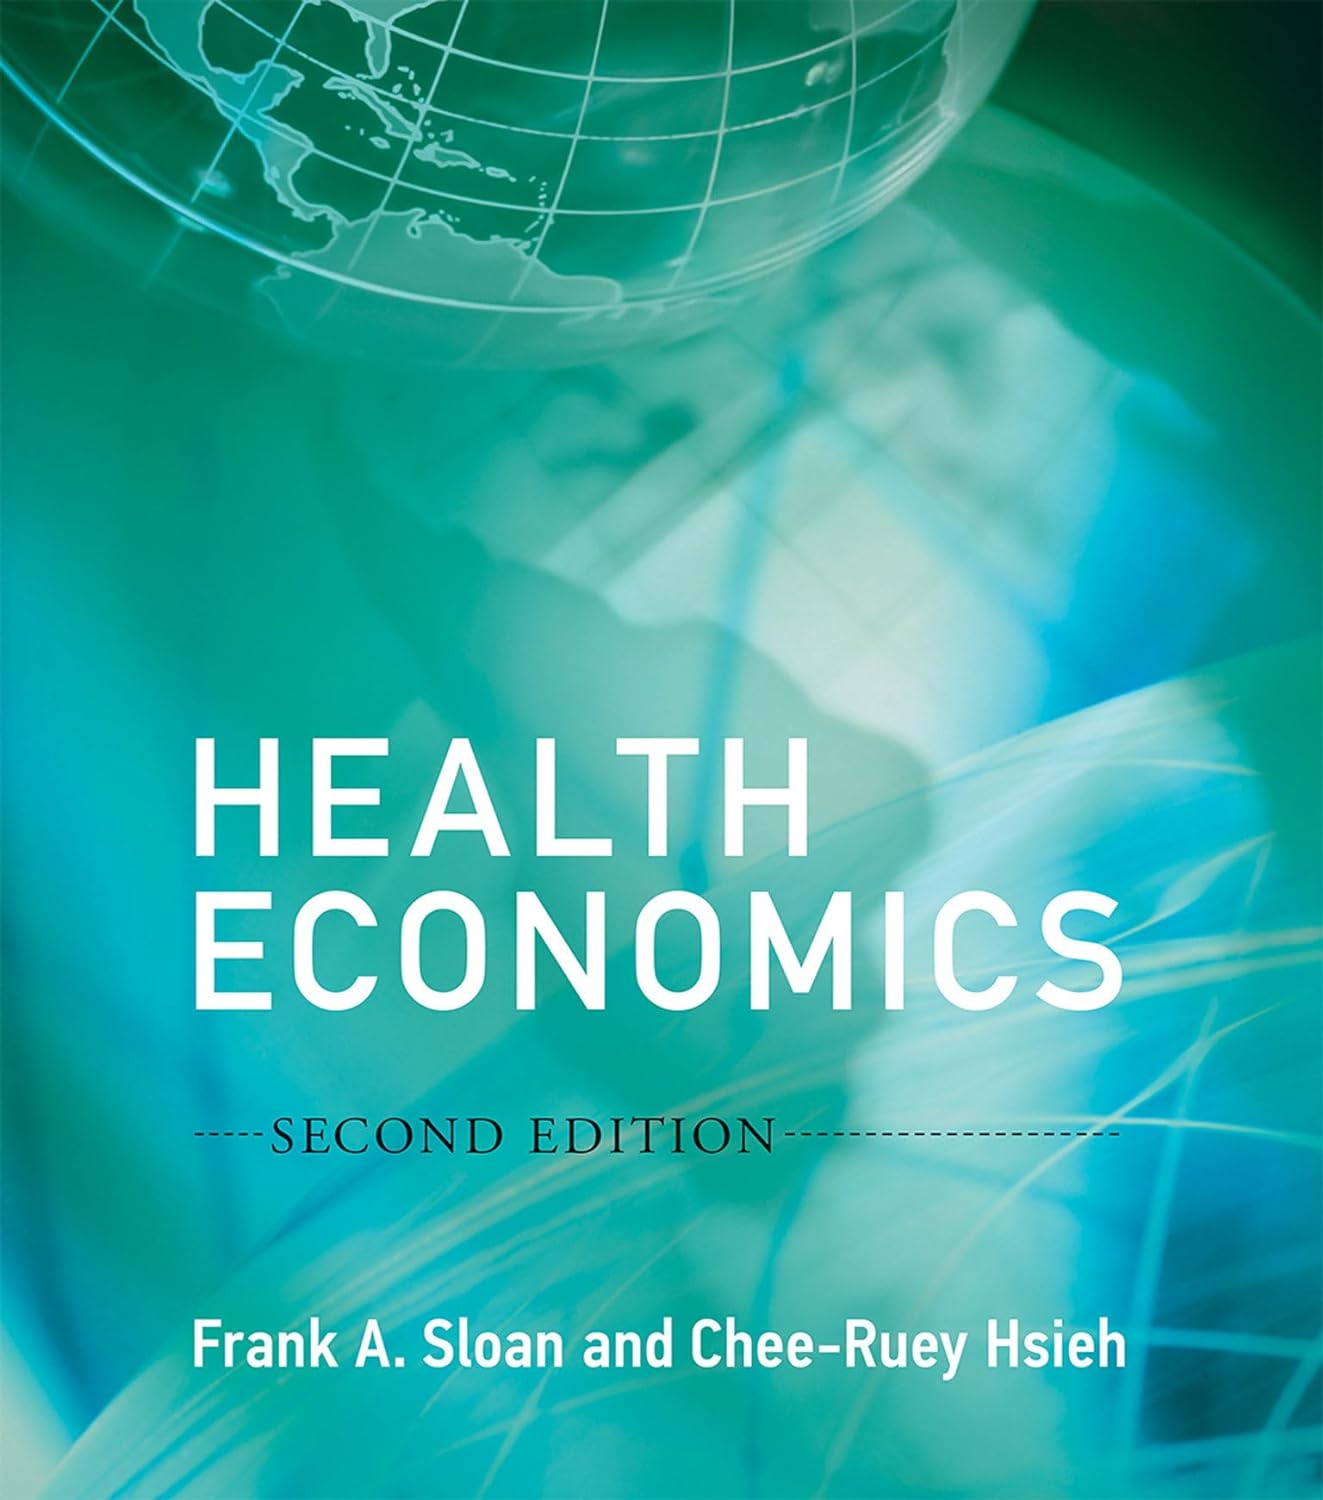 Health Economics, second edition (Mit Press) 2nd ed. Edition